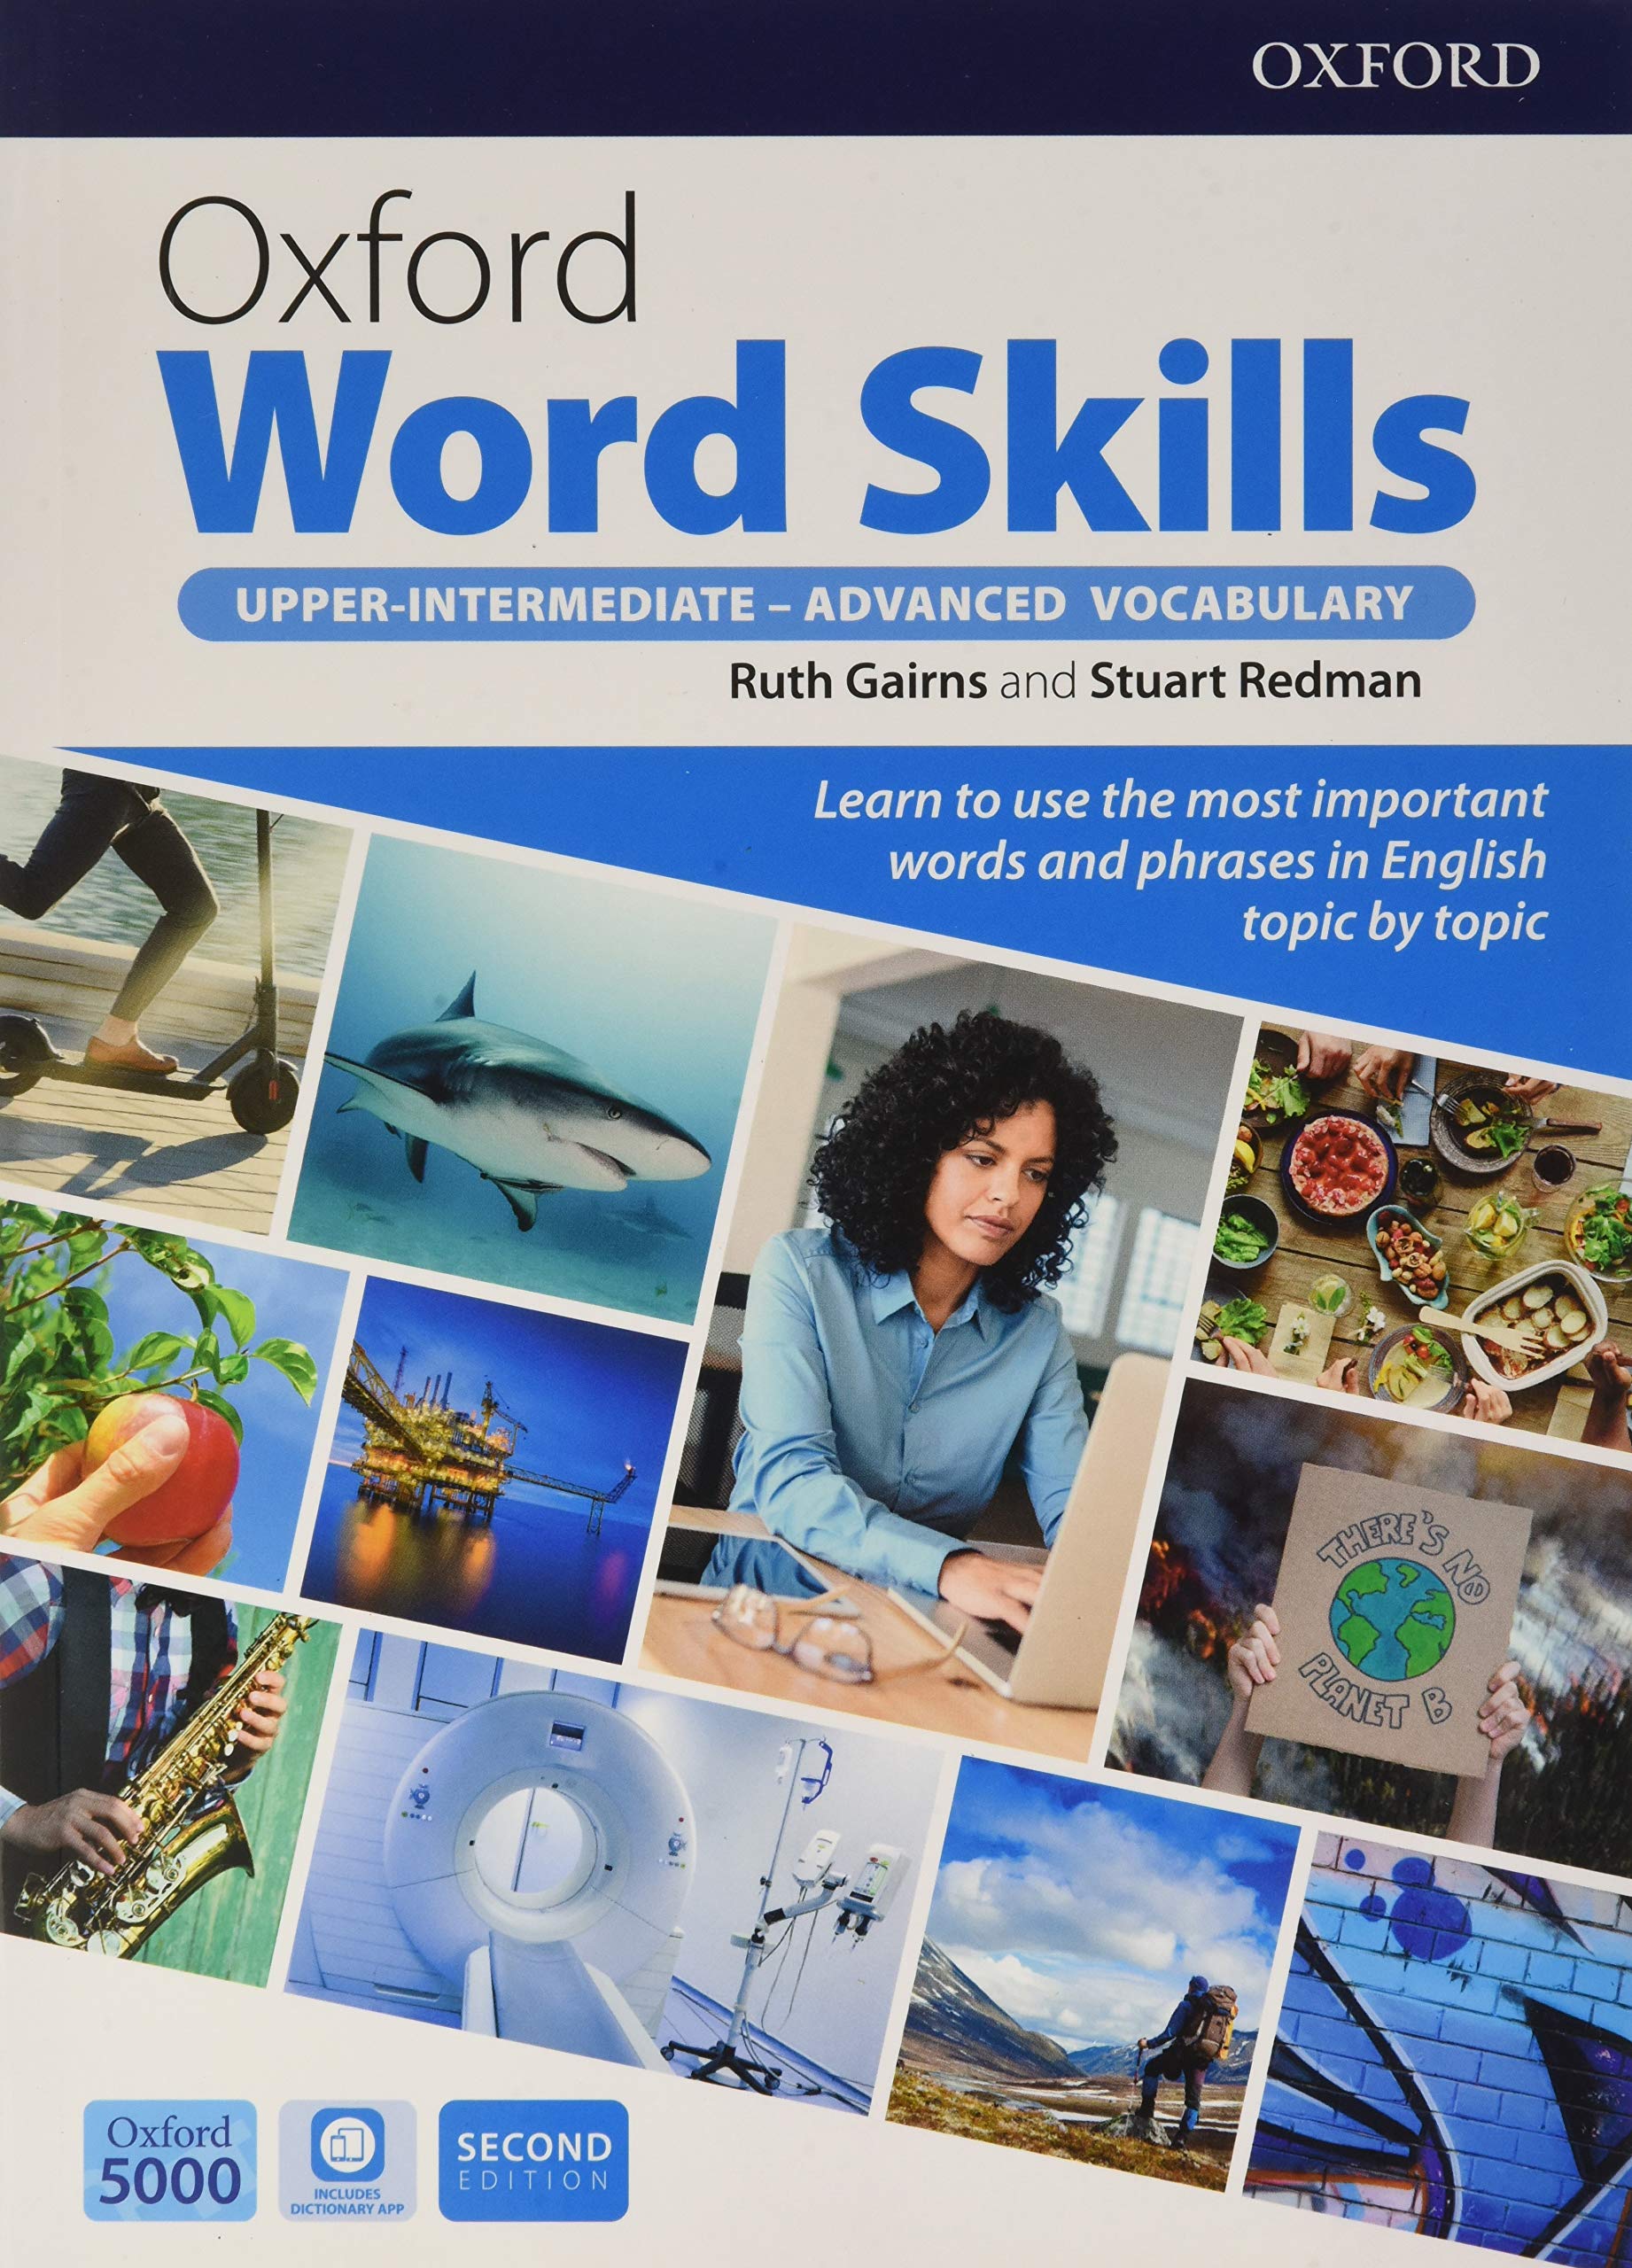 OXFORD WORD SKILLS UPPER-INTERMEDIATE - ADVANCED 2nd EDITION Student's Book + APP PACK